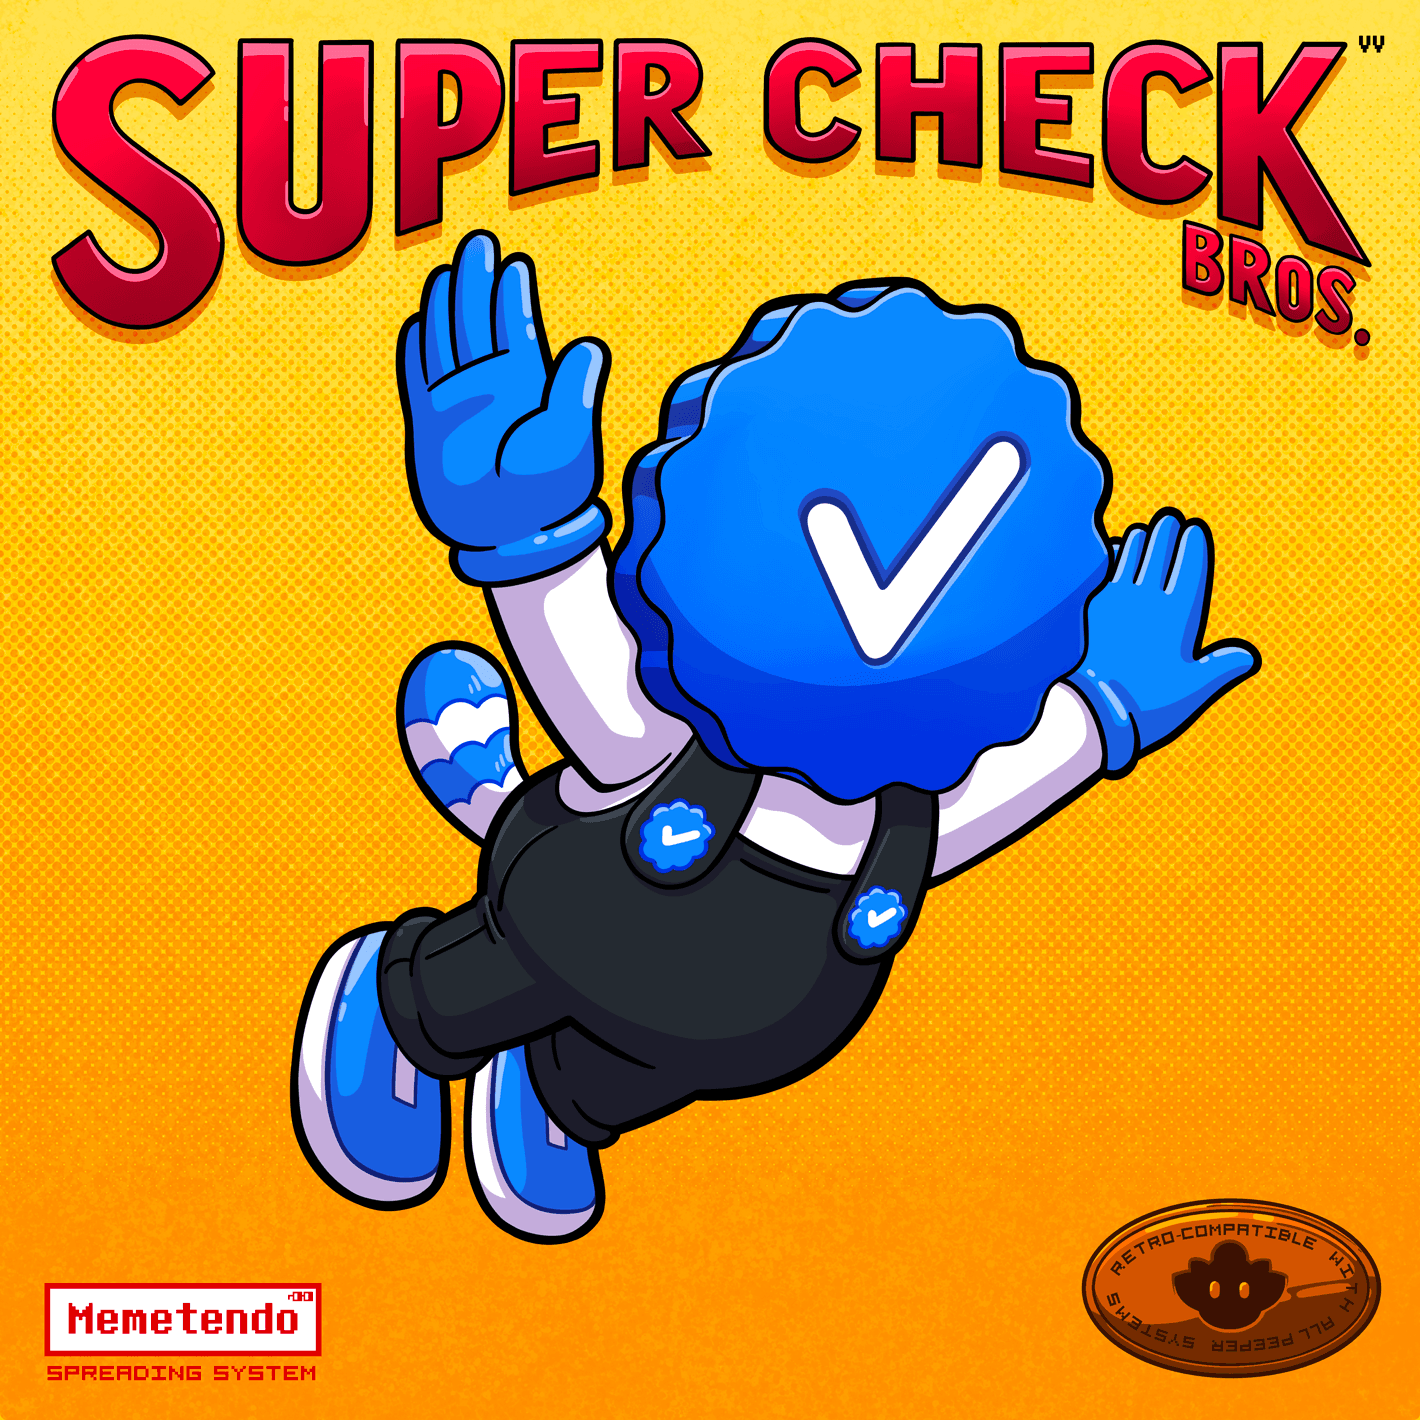 Super Check Bros. 219